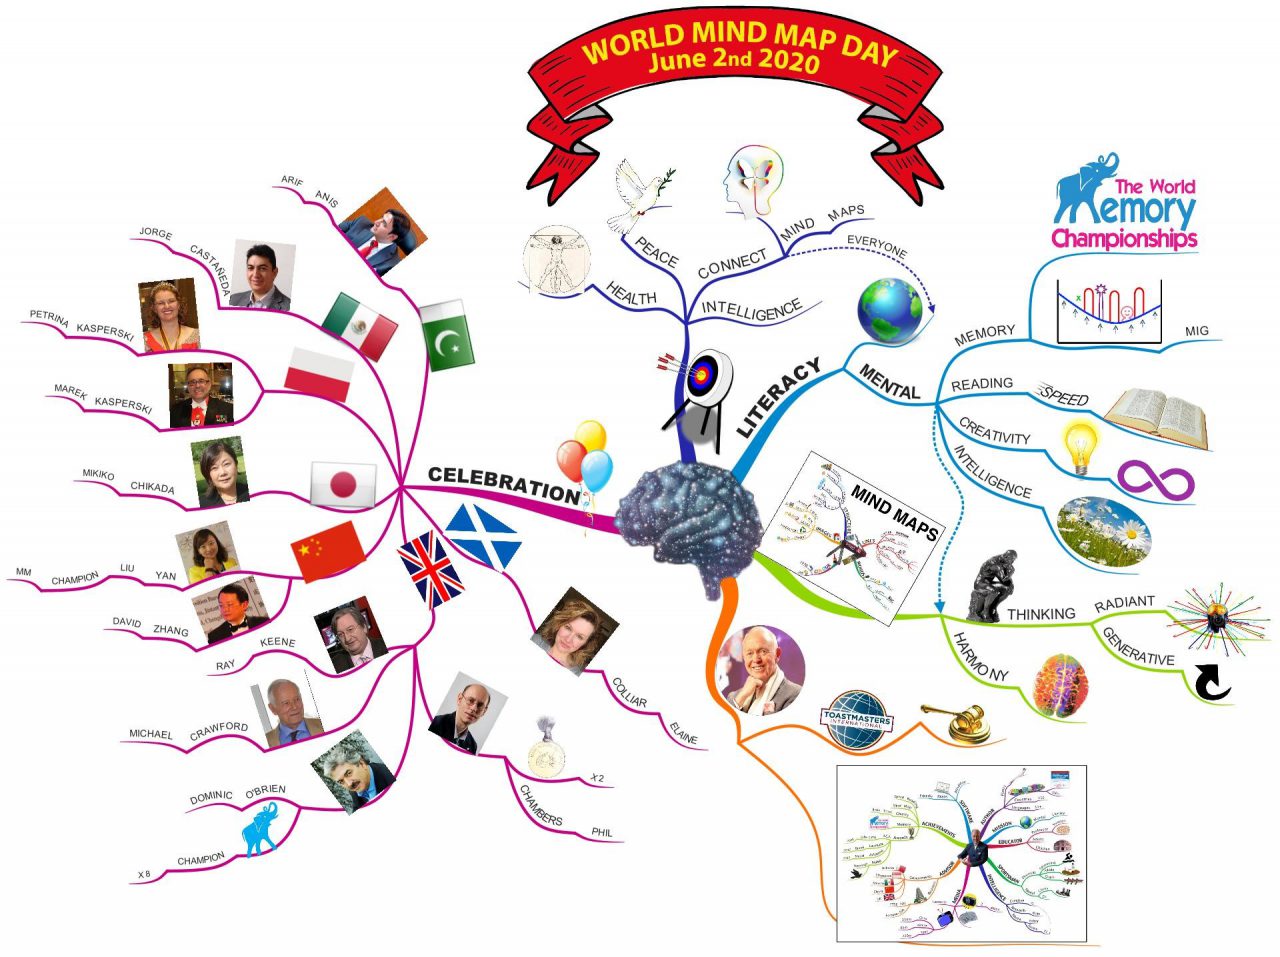 World Mind Map Day 2020 - The World Memory Championships